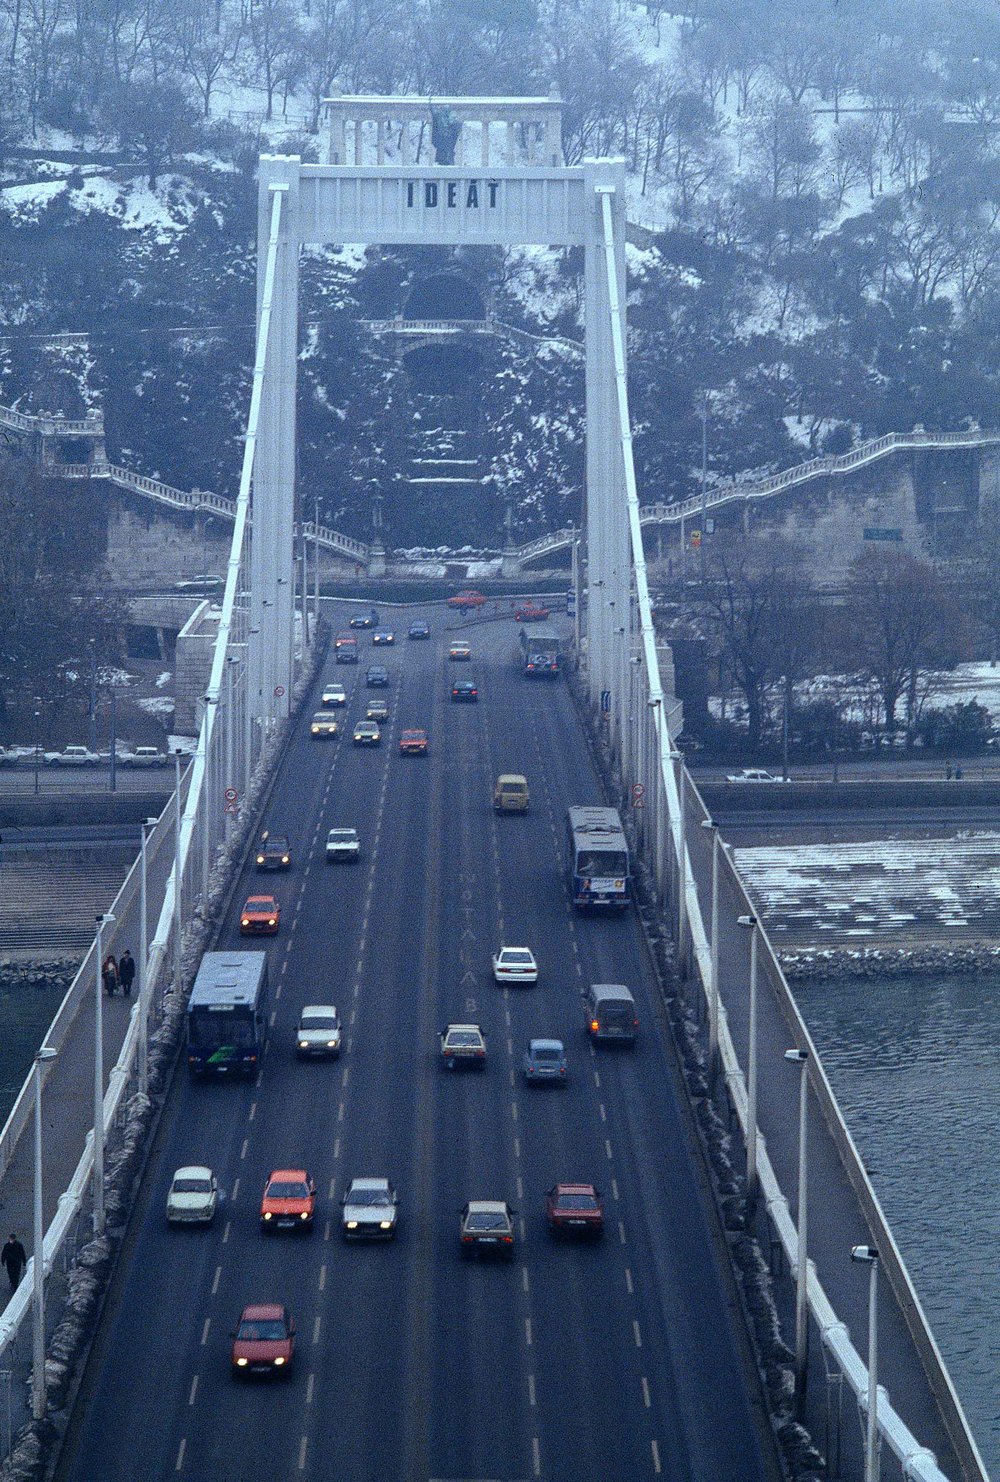 Directions Signs 1993. Elisabeth Bridge, Budapest